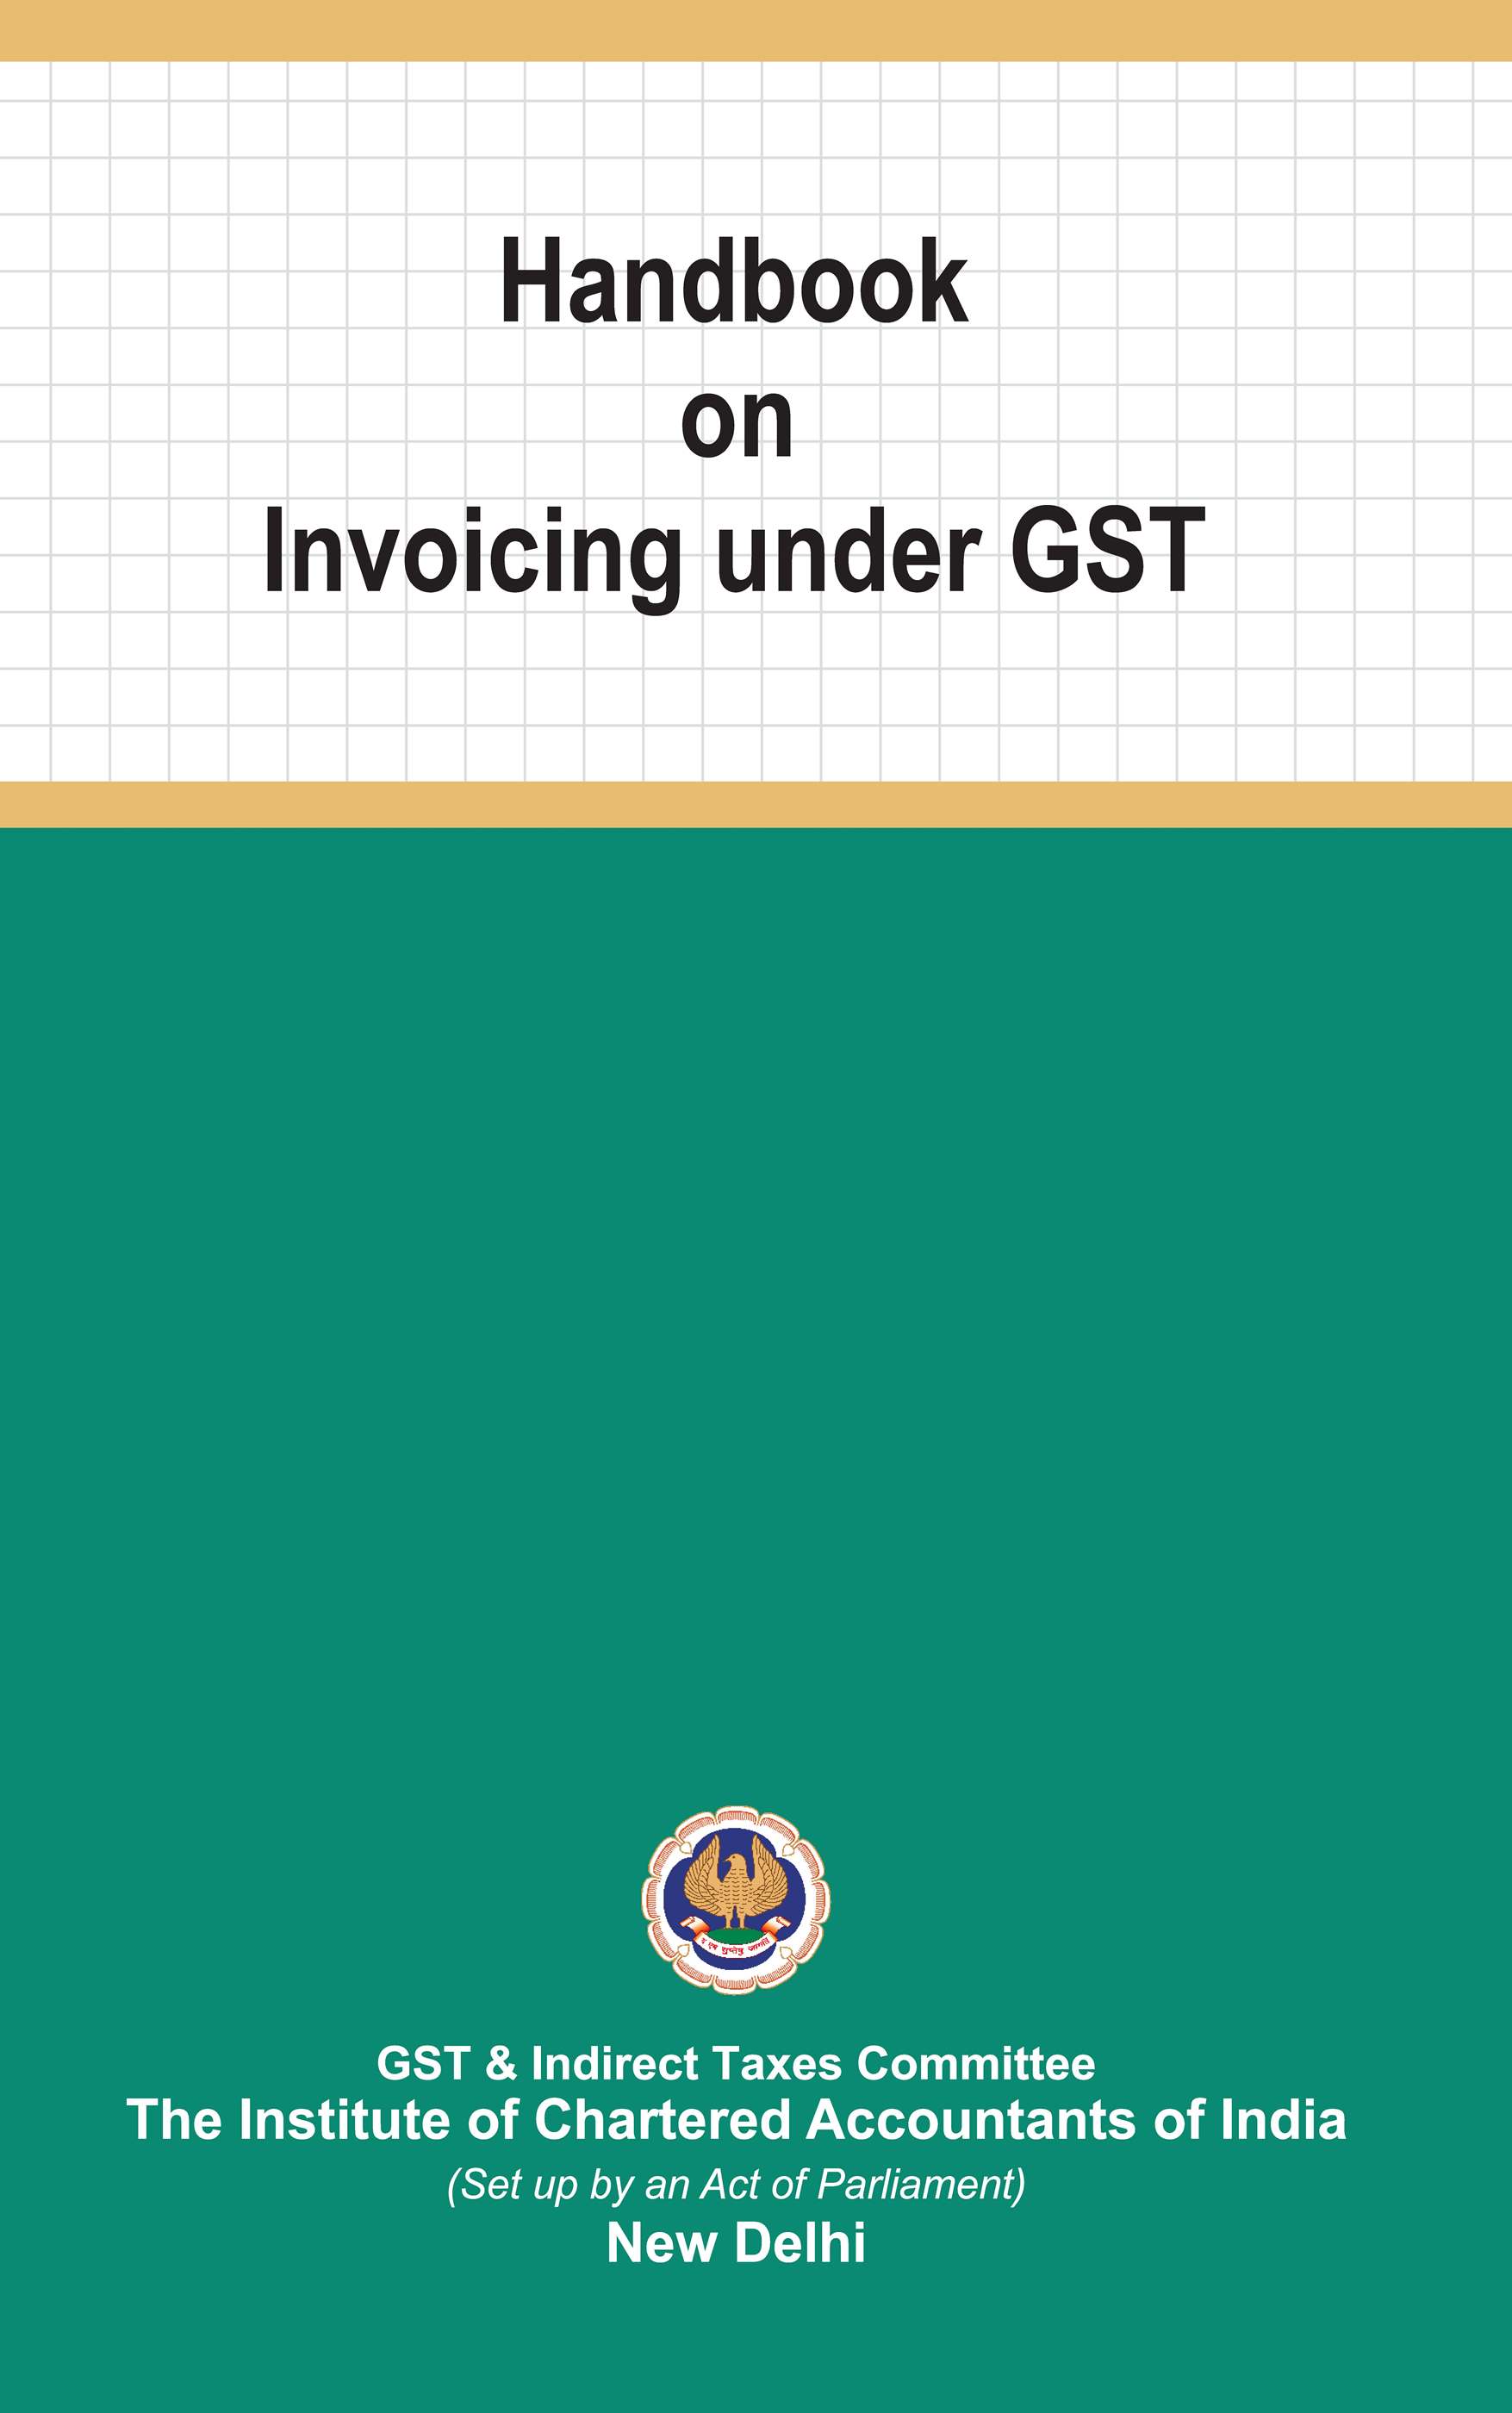 Handbook on Invoicing under GST - November, 2022